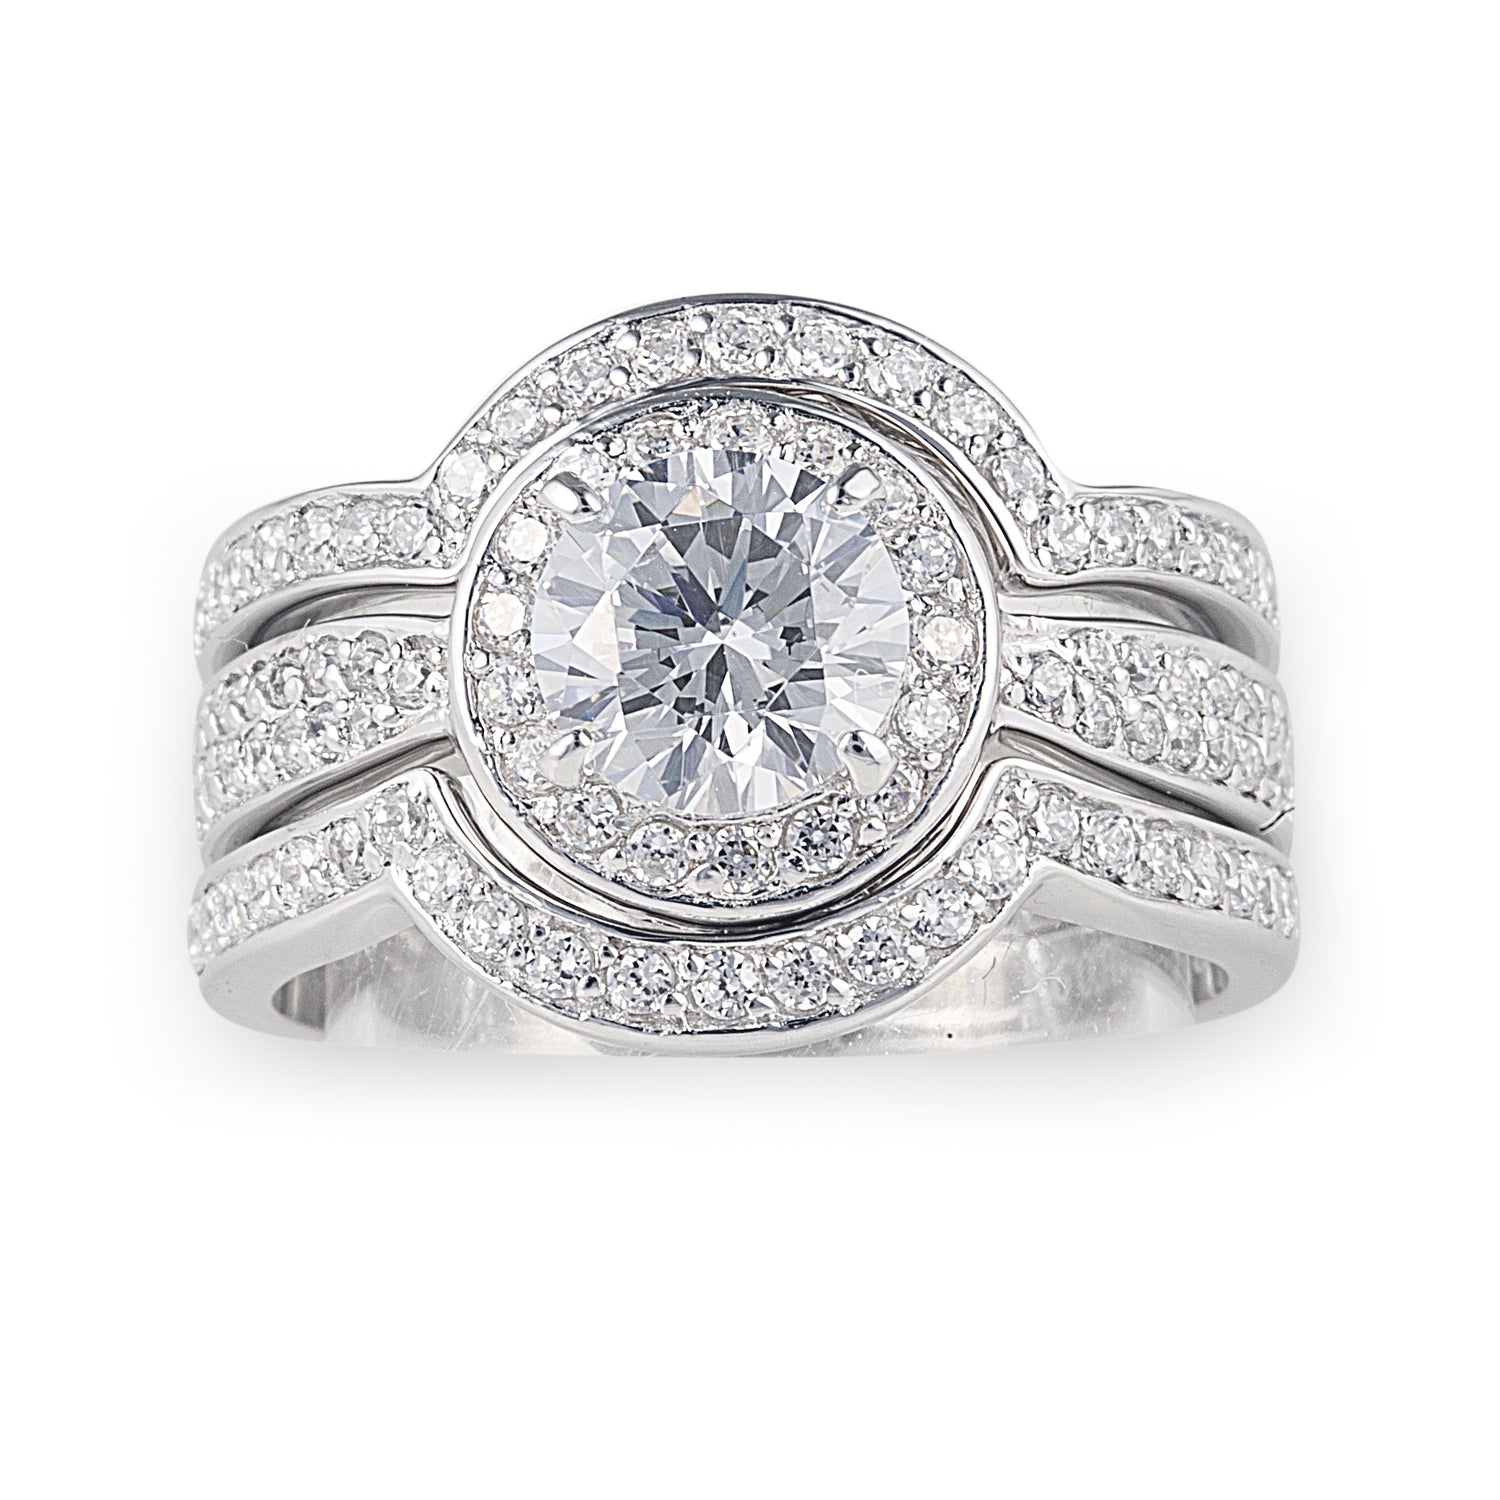 Bridal Rings. Worldwide Shipping